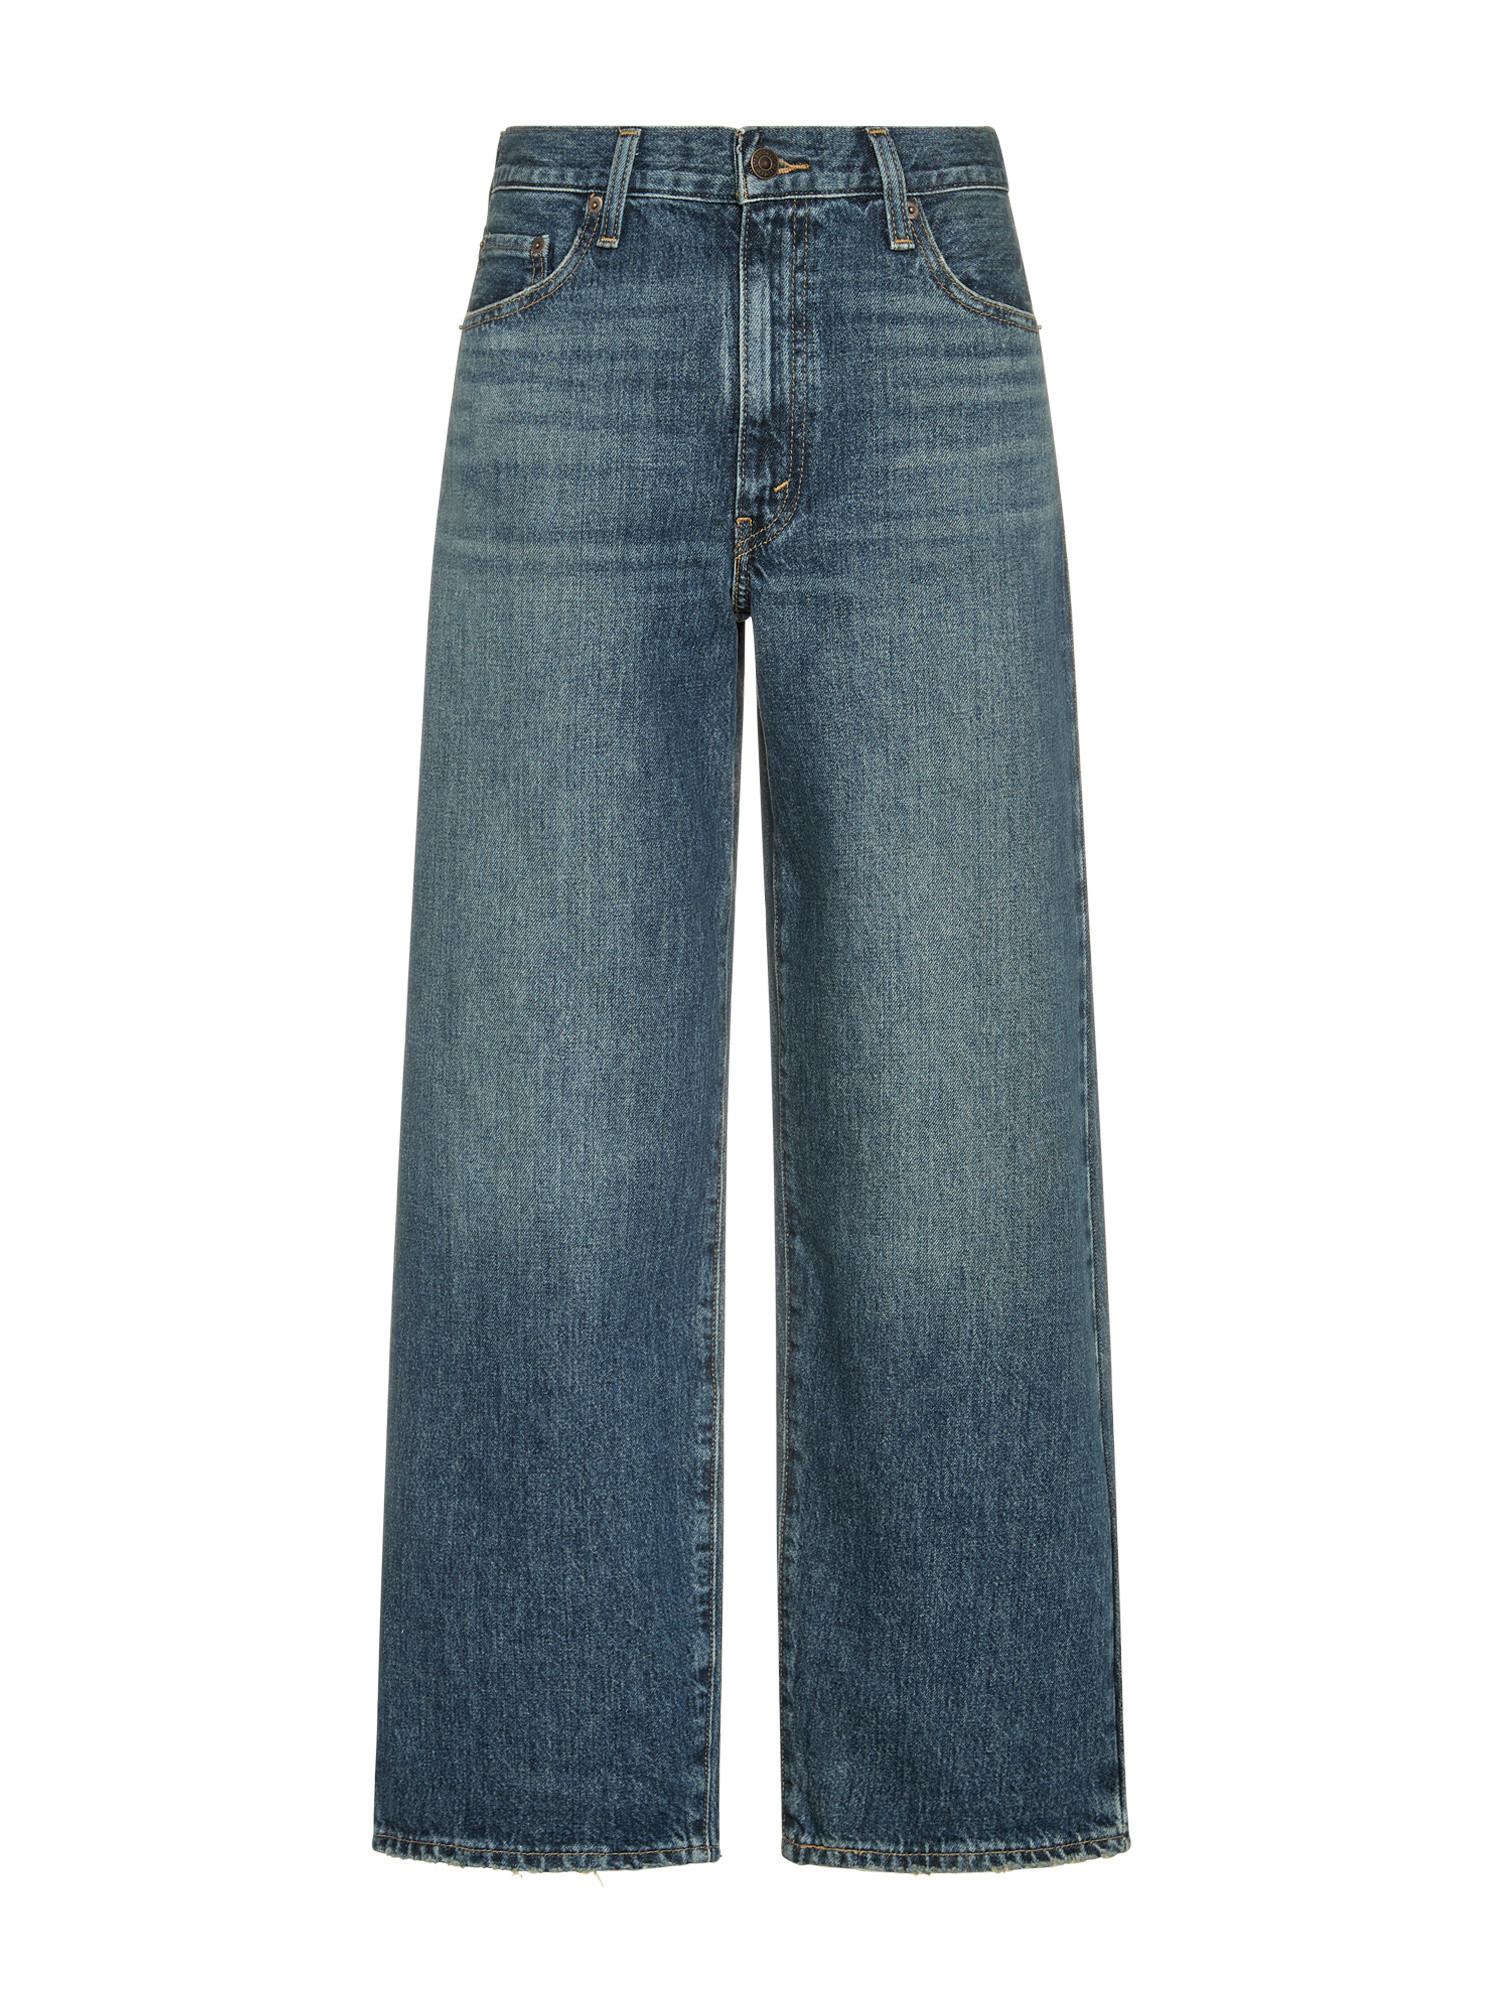 Levi's - Oversized dad jeans, Blue, large image number 0